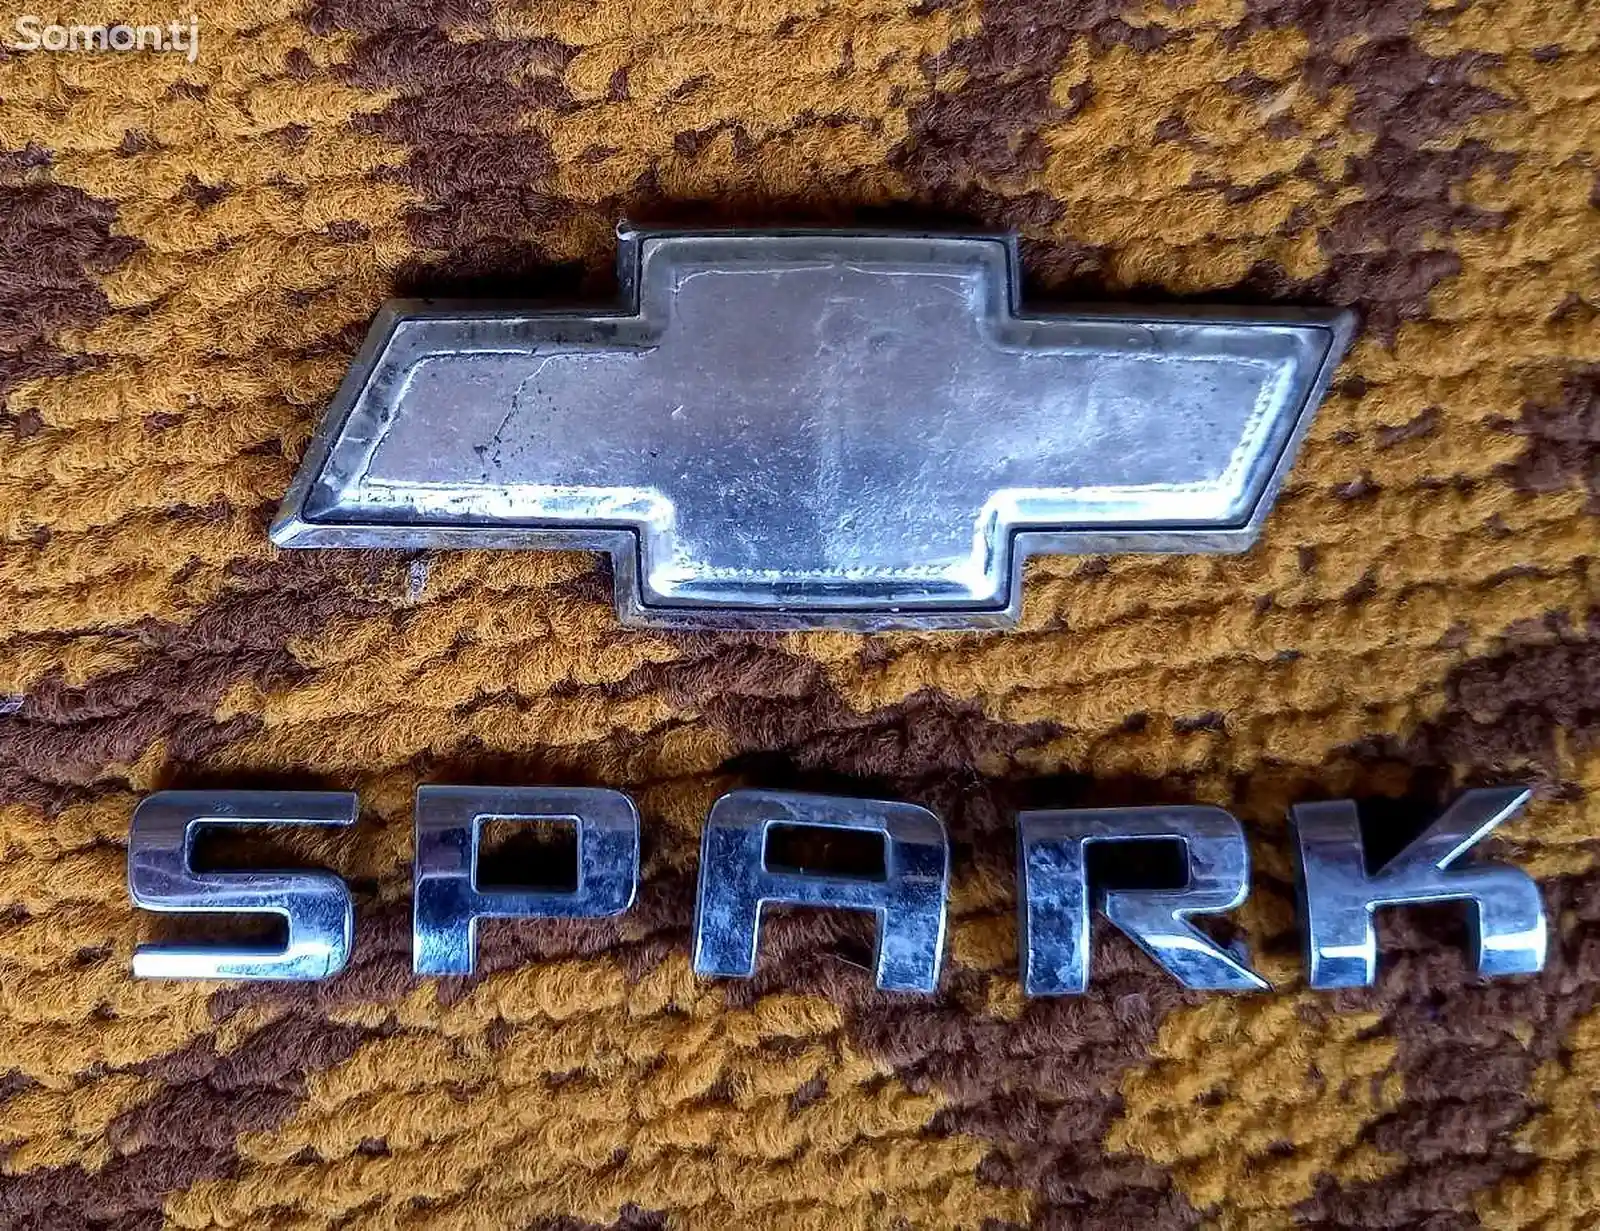 Логотип Spark